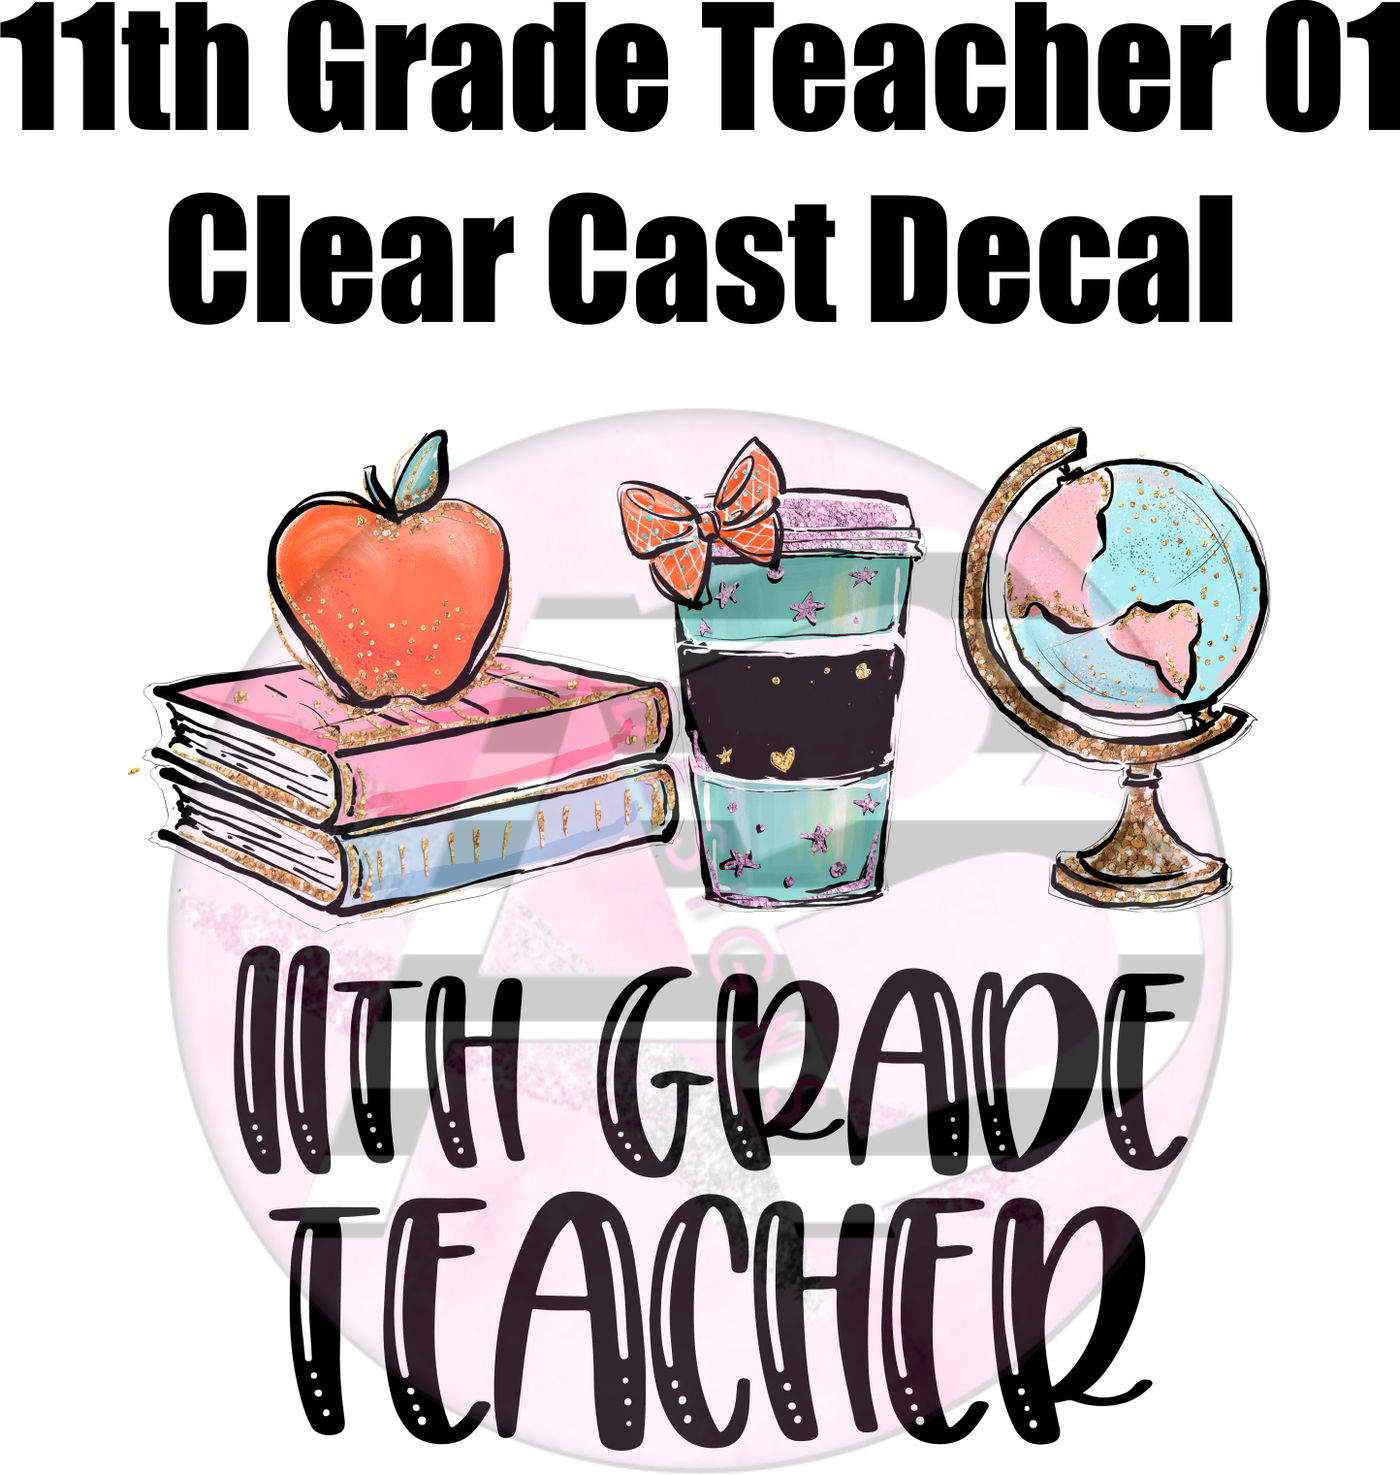 11th Grade Teacher 01 - Clear Cast Decal